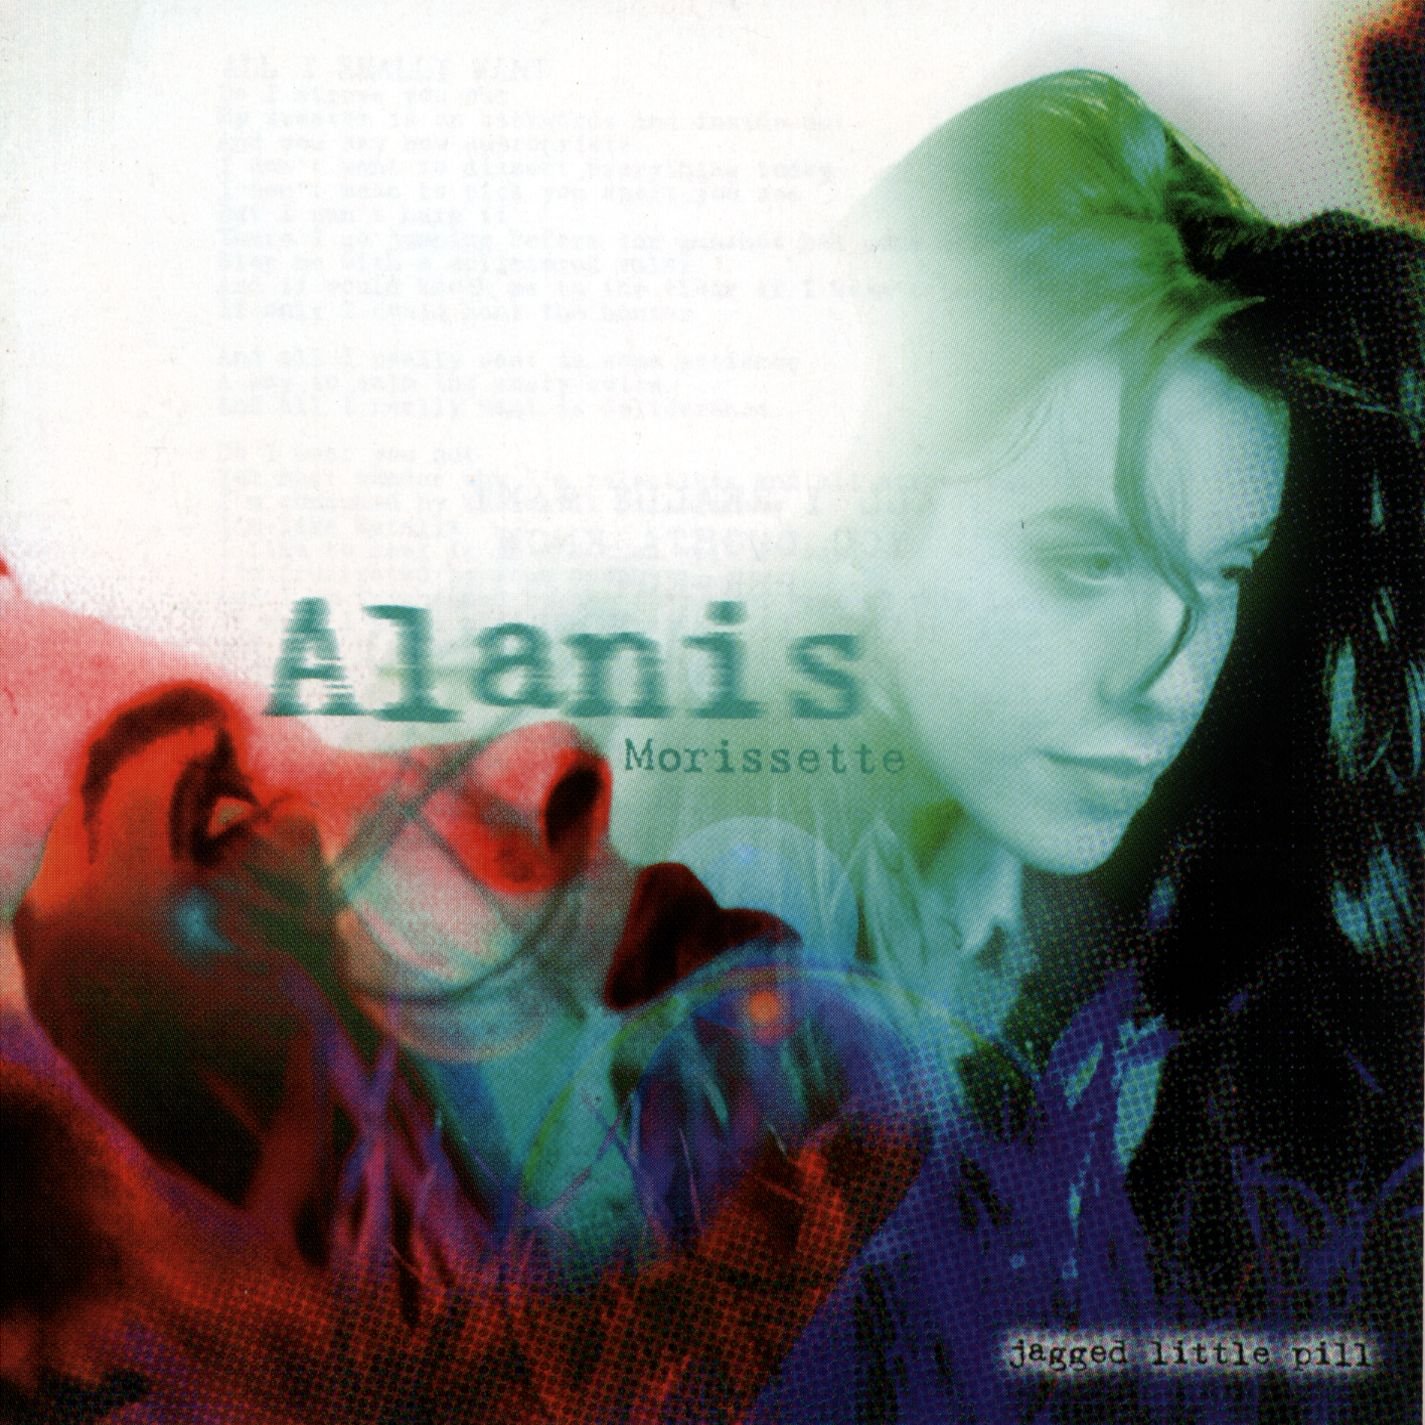 Alanis Morissette "Jagged little pill" LP